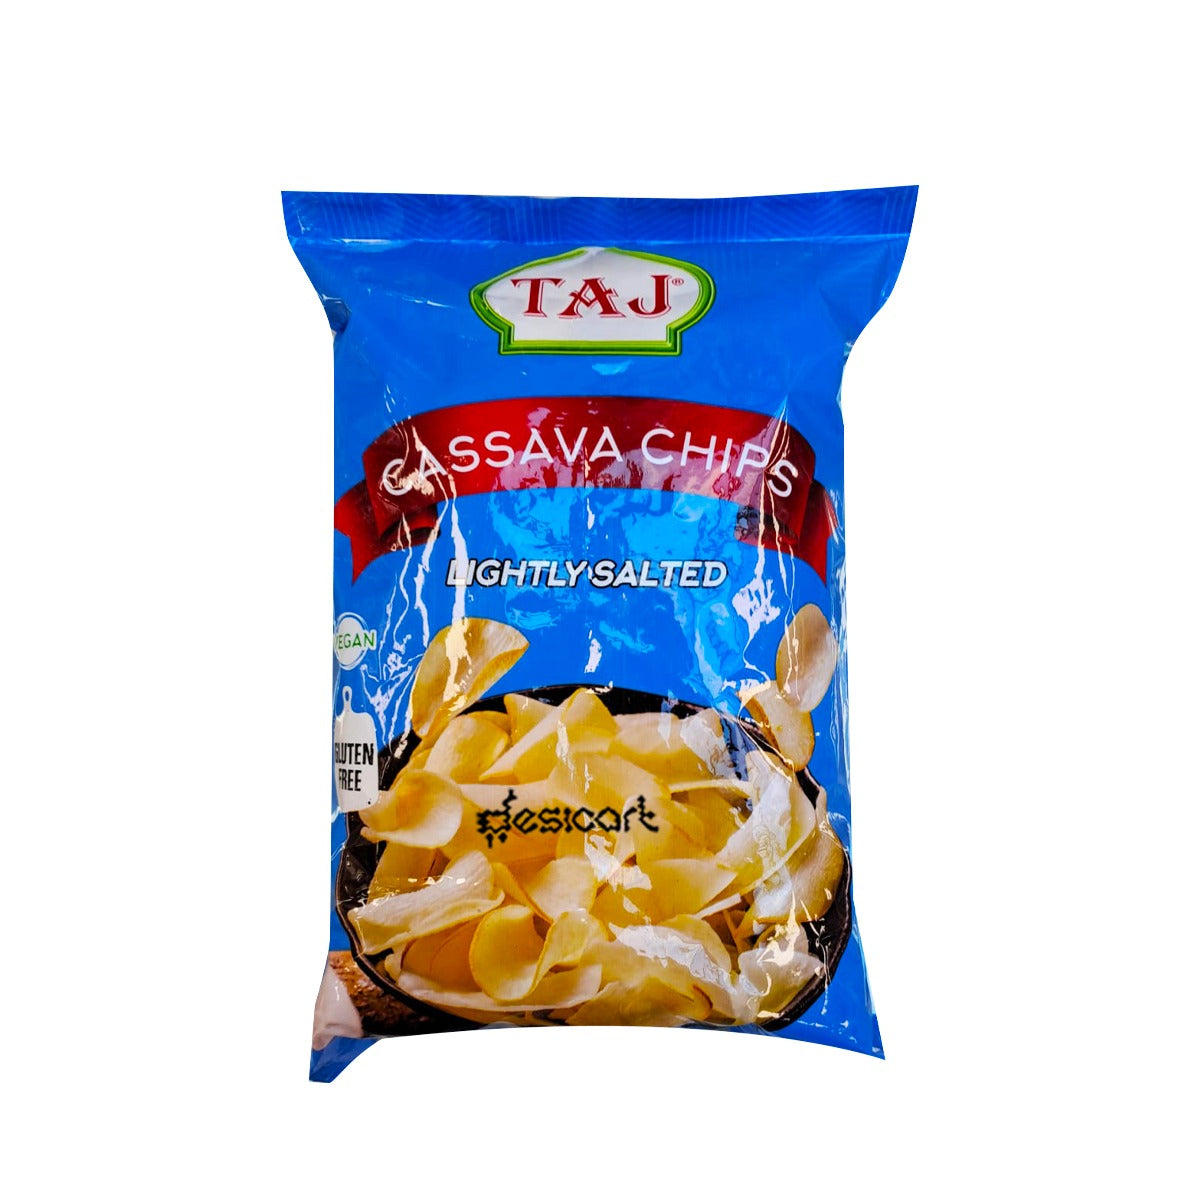 Taj Cassava Chips Lightly Salted 200g